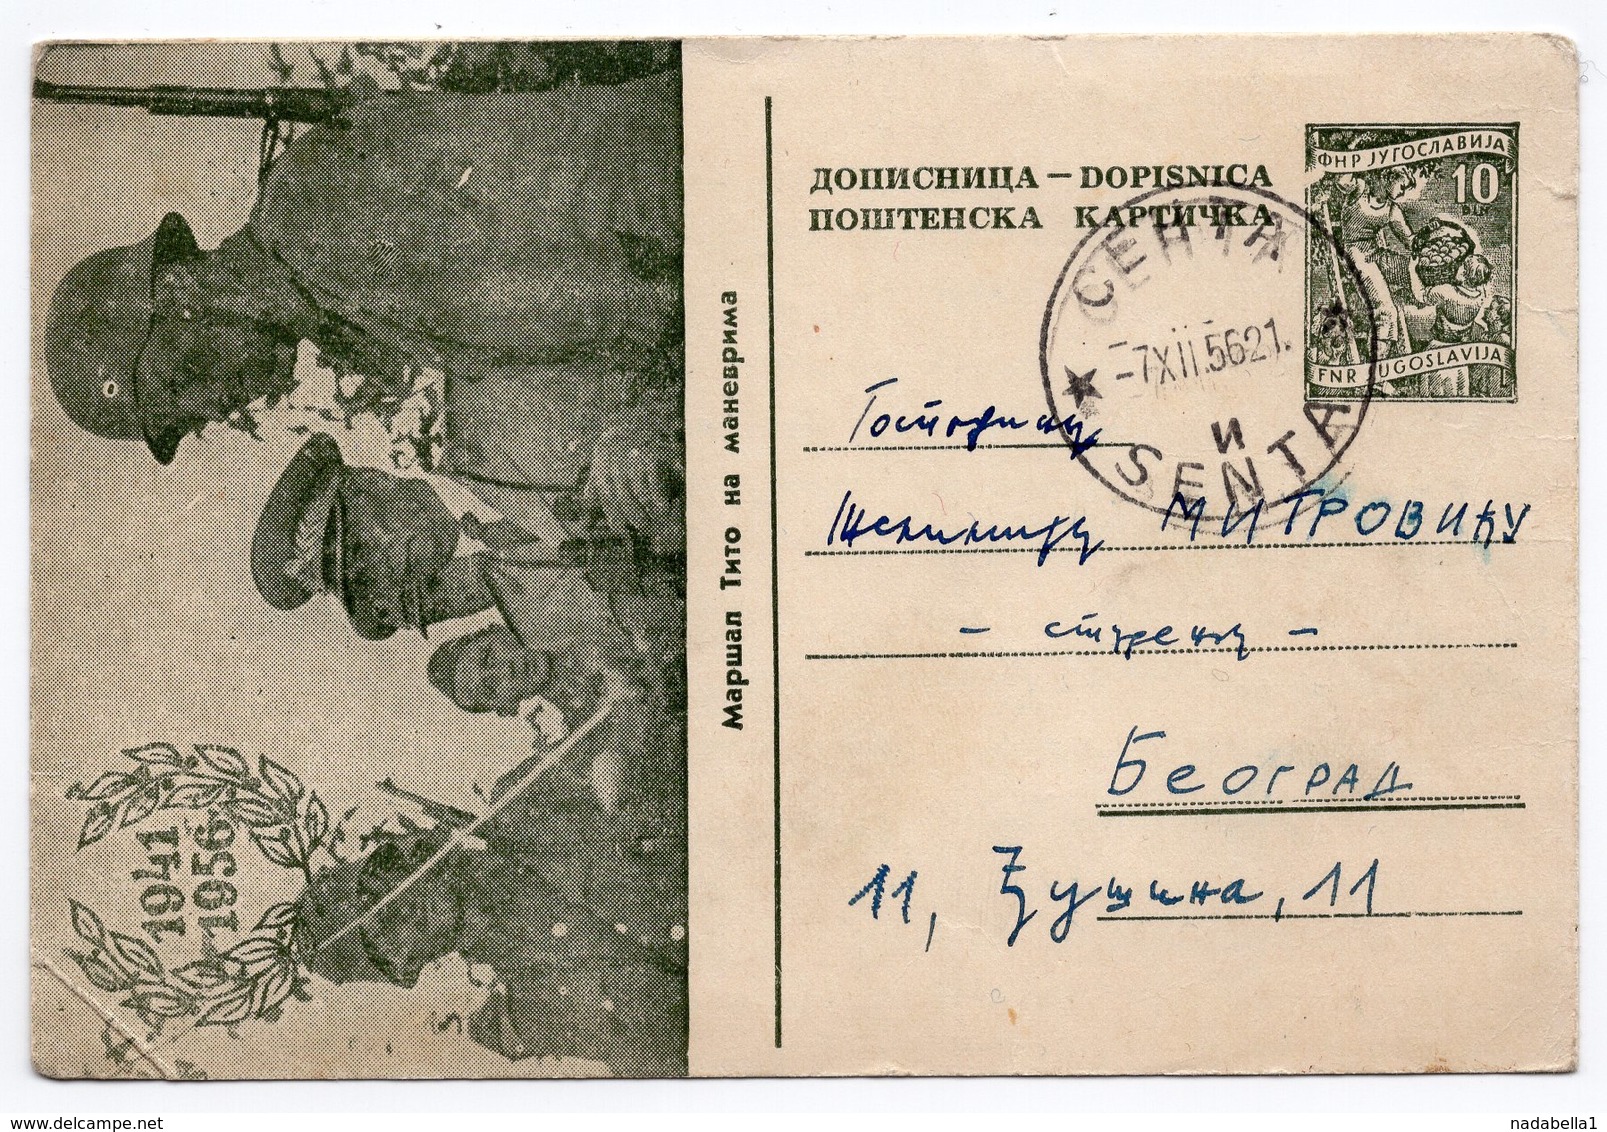 1956 YUGOSLAVIA, MARSAL, MILITARY MANEUVERS, 10 DINARA GREEN, USED STATIONERY CARD - Postal Stationery